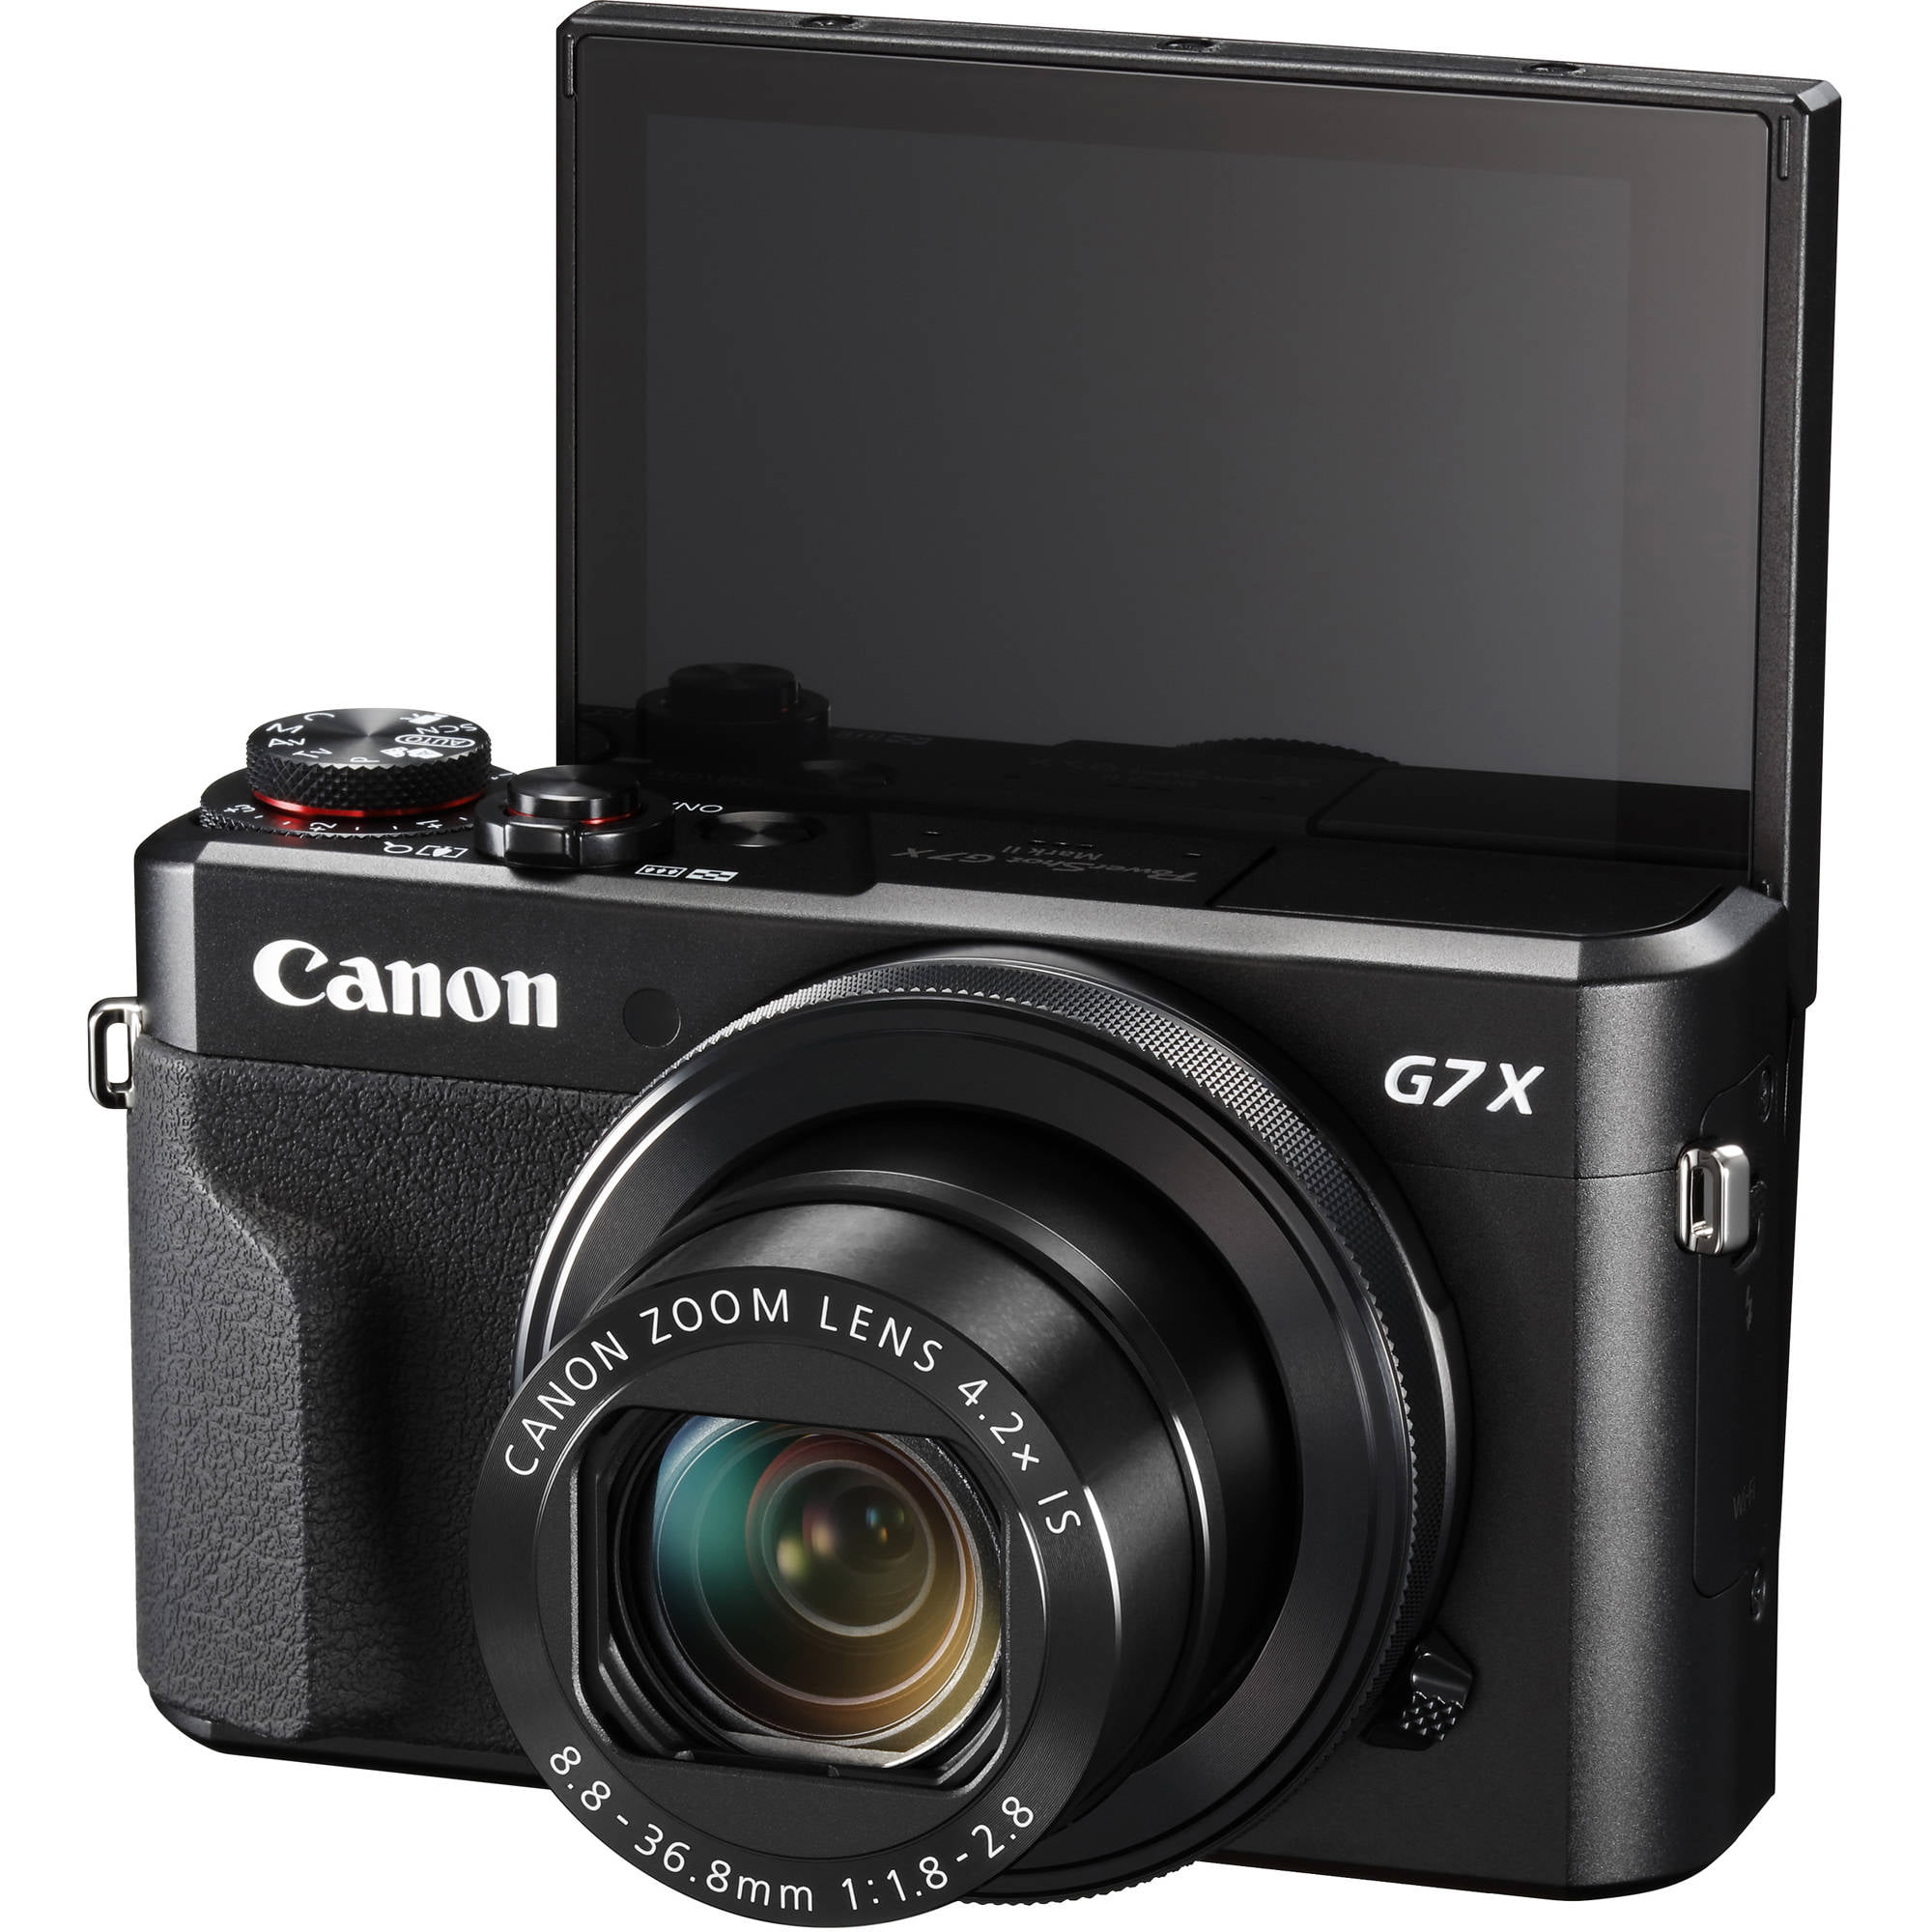 Canon PowerShot G7 X Mark II Digital Camera (Black) with Essential